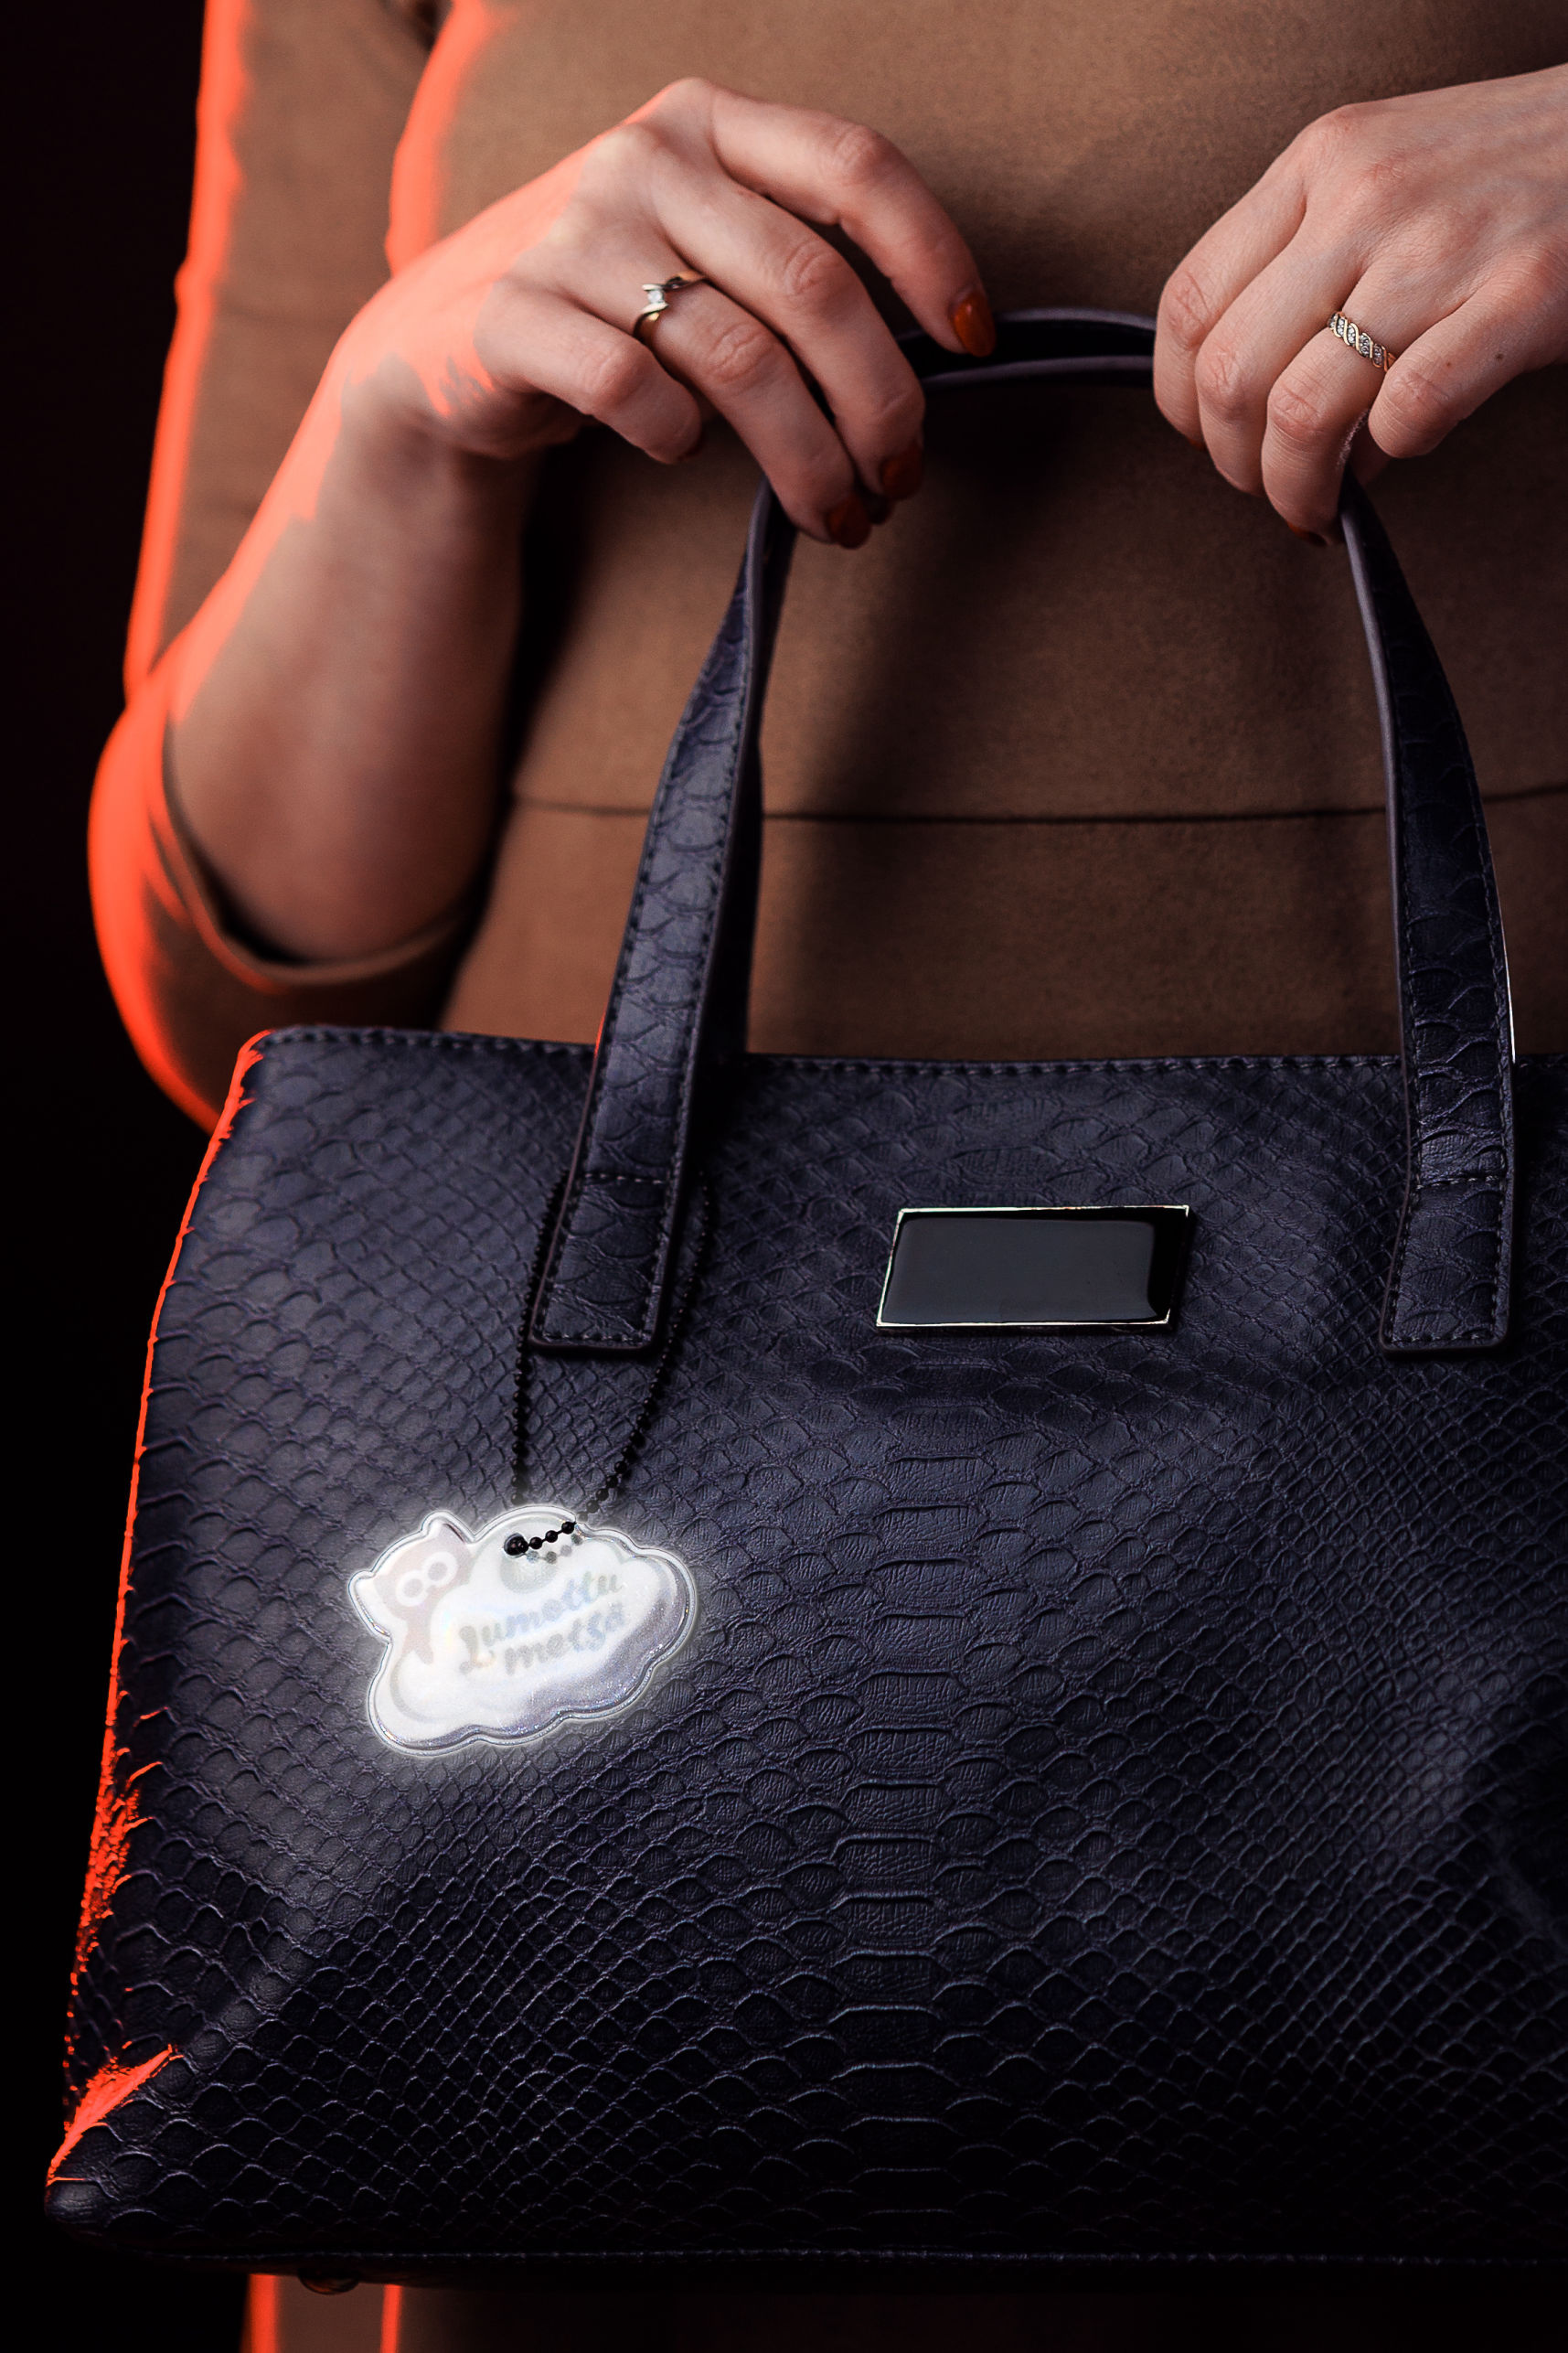 Fashionable reflective soft hanger on handbag